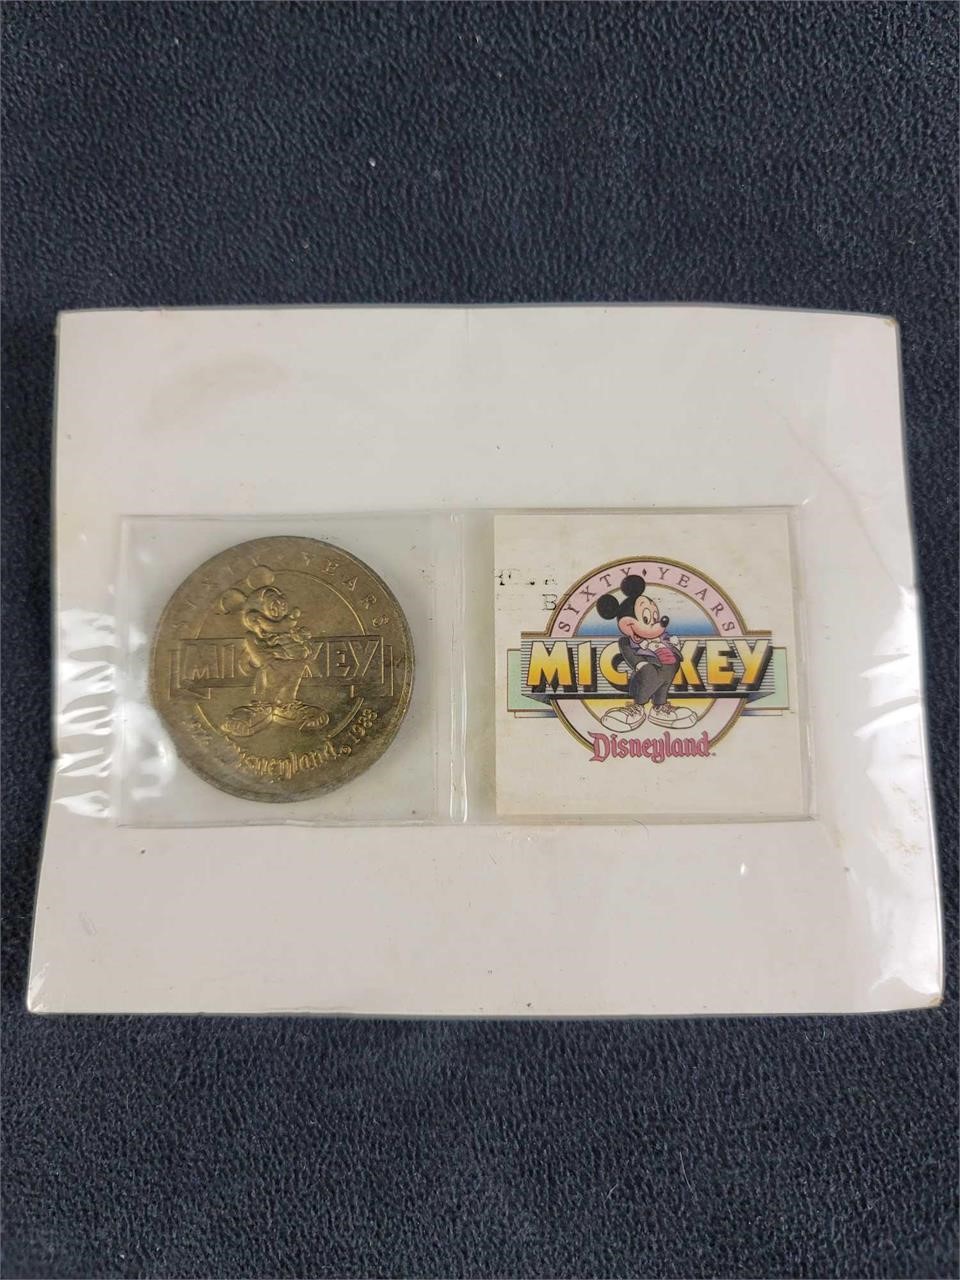 Mickey's Commemorative Coin 1988 60th Birthday